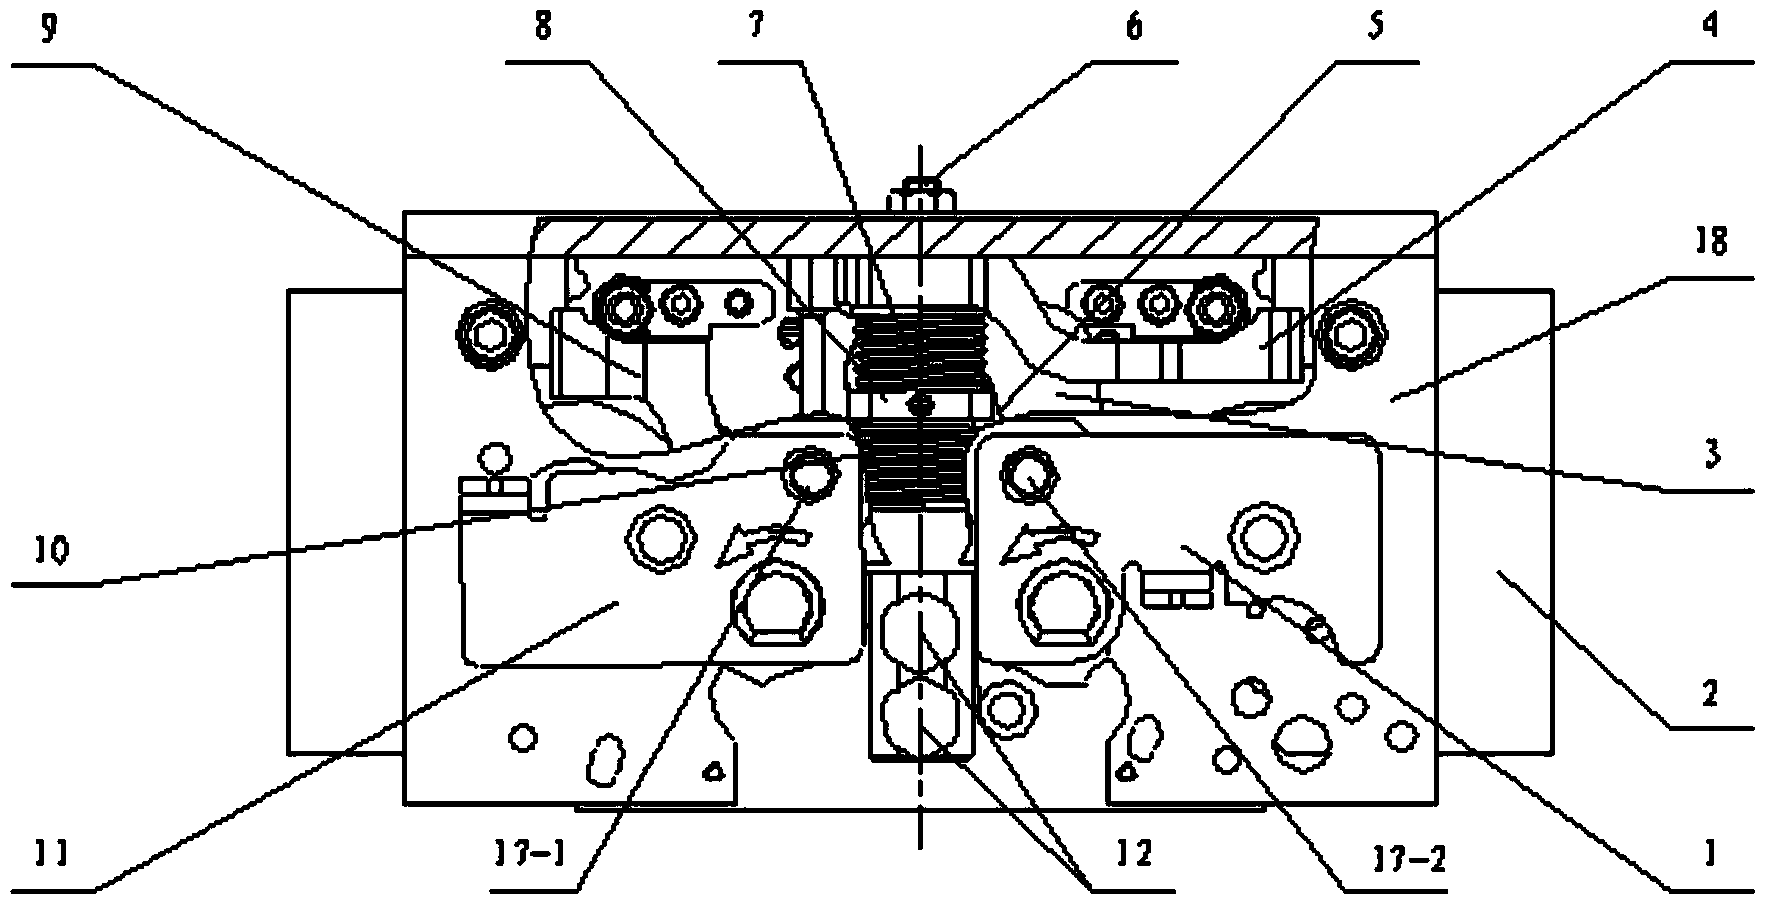 Manual interlocking device of three-station mechanism